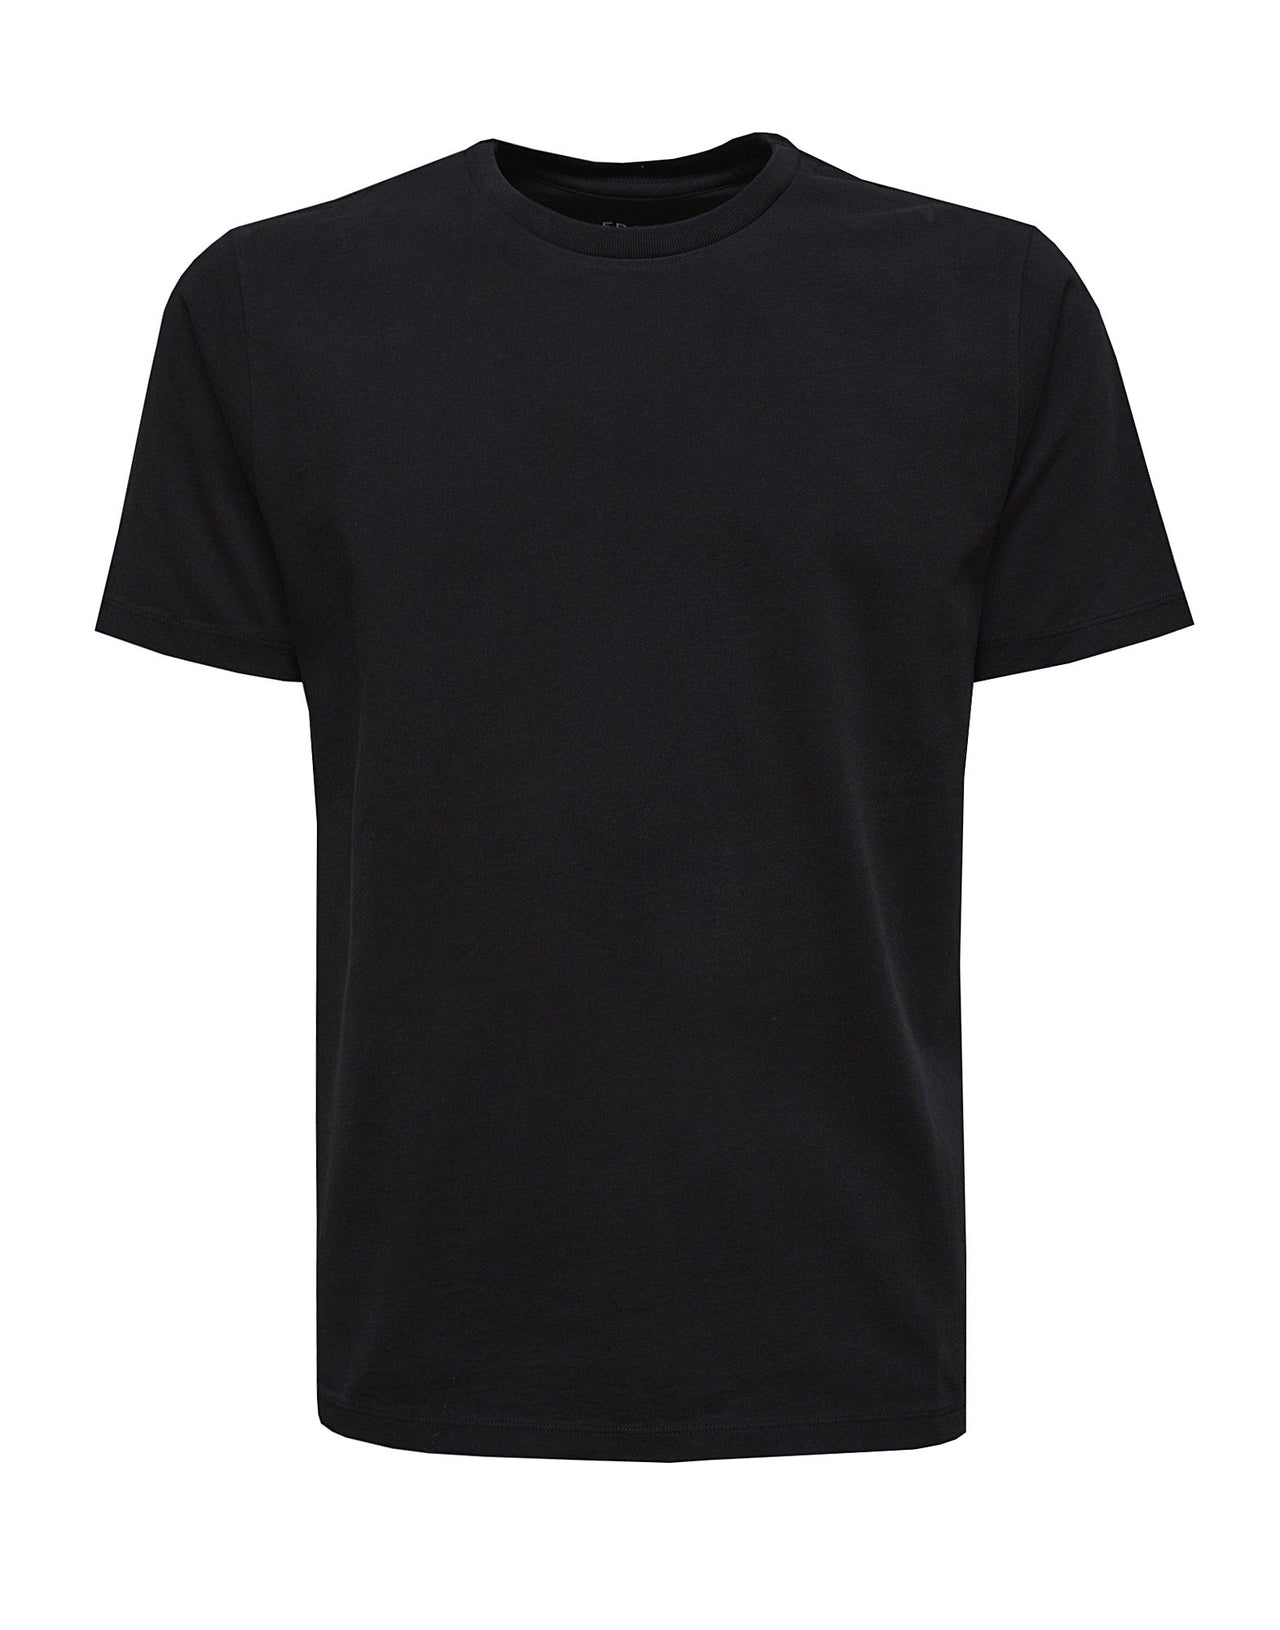 Frame L.A. Use Normal Fit Black T-shirt